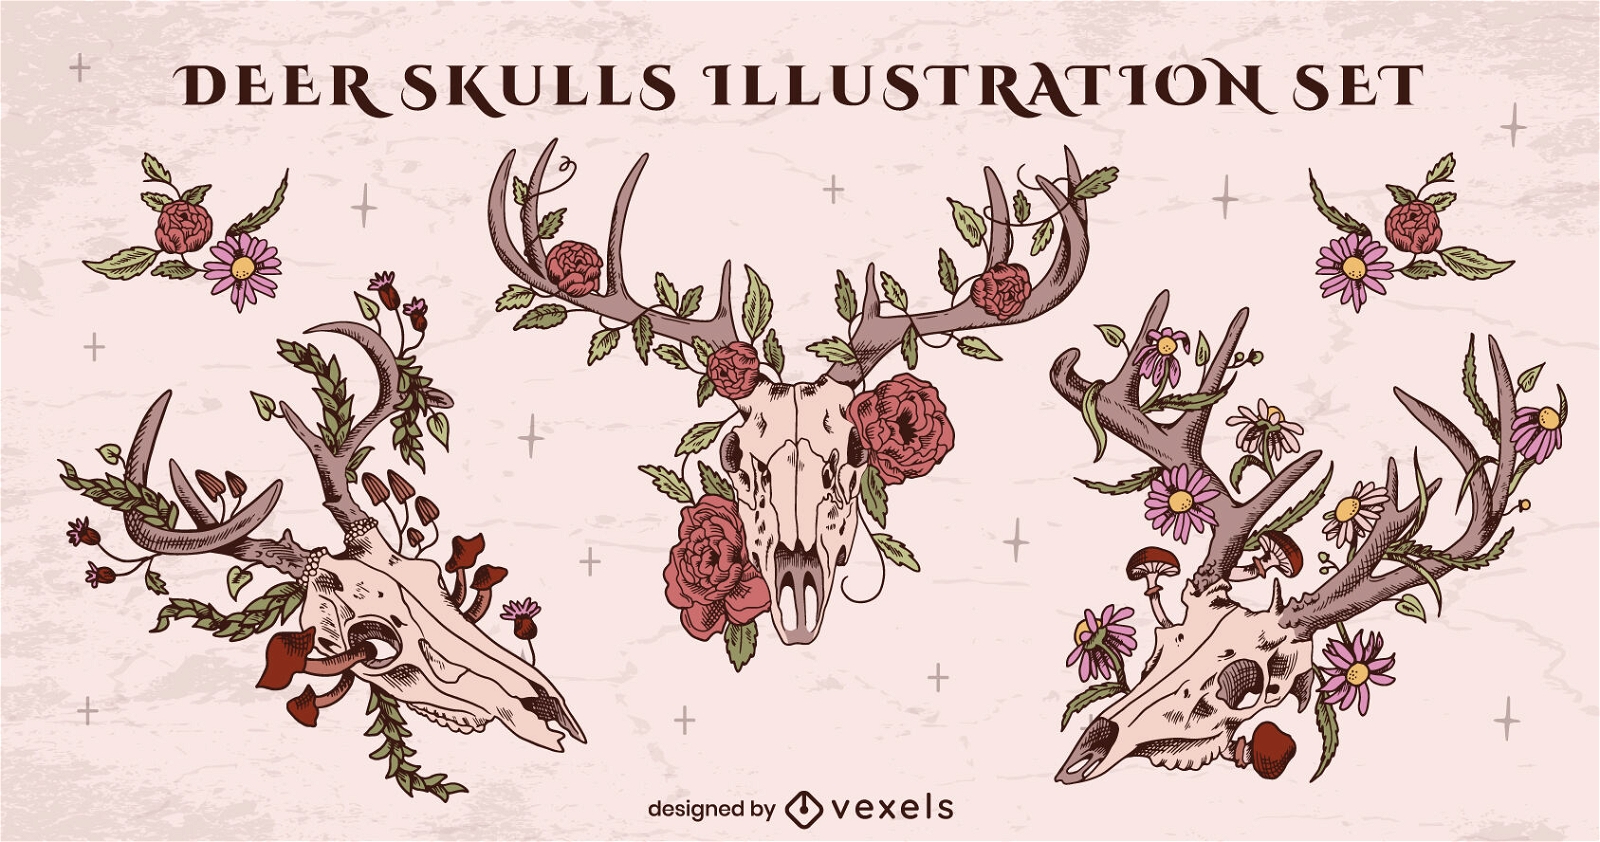 Deer skull illustration set